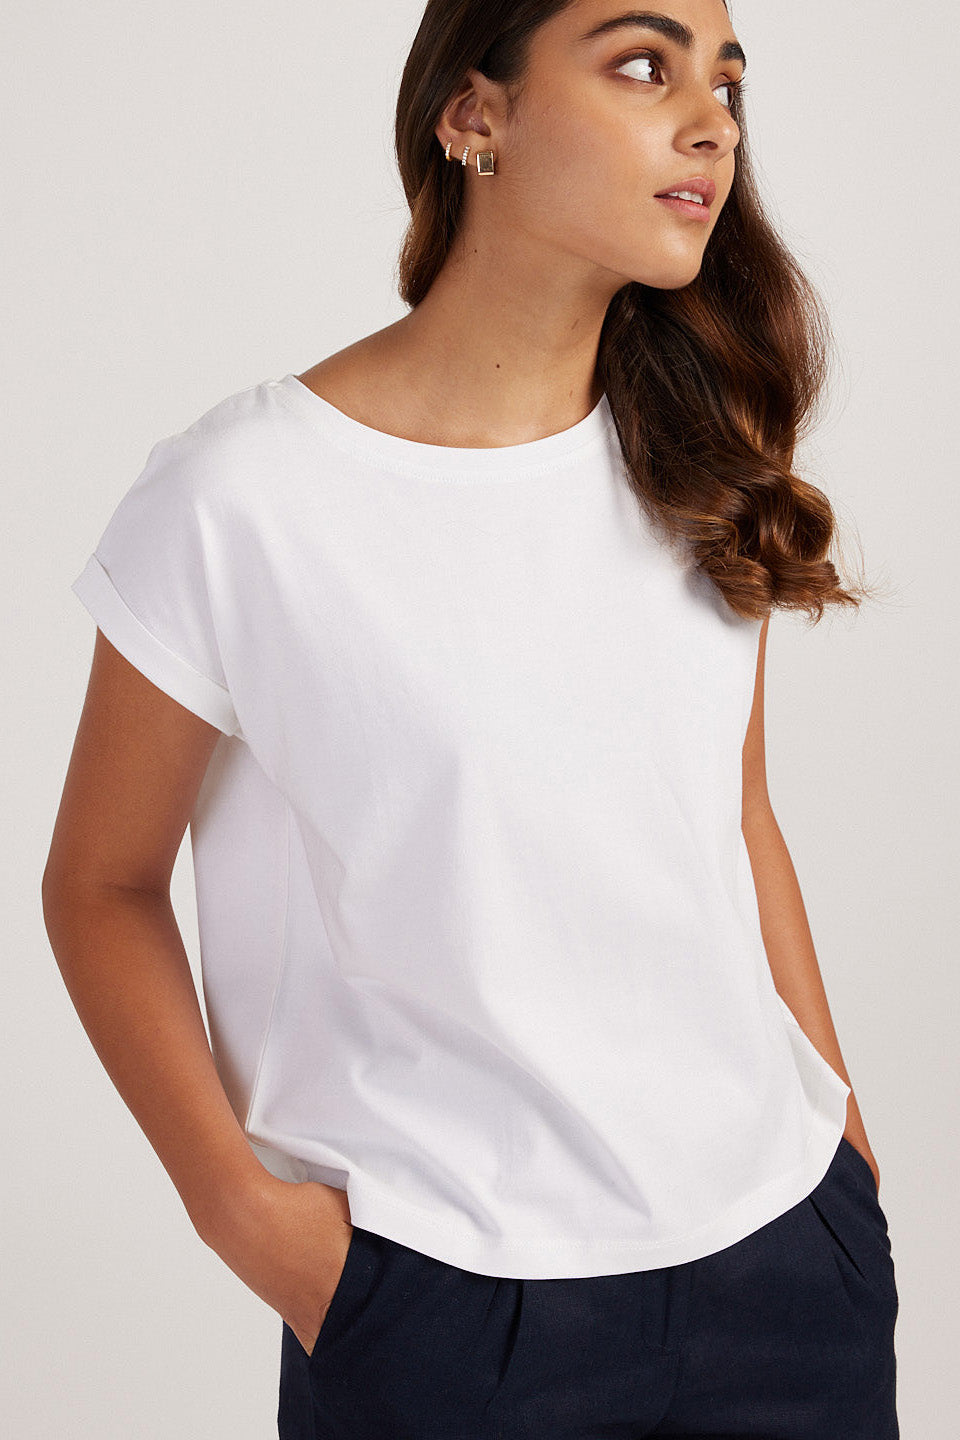 Women T shirt - Pima Boxy Cloud White T shirts for Women | Creatures of Habit